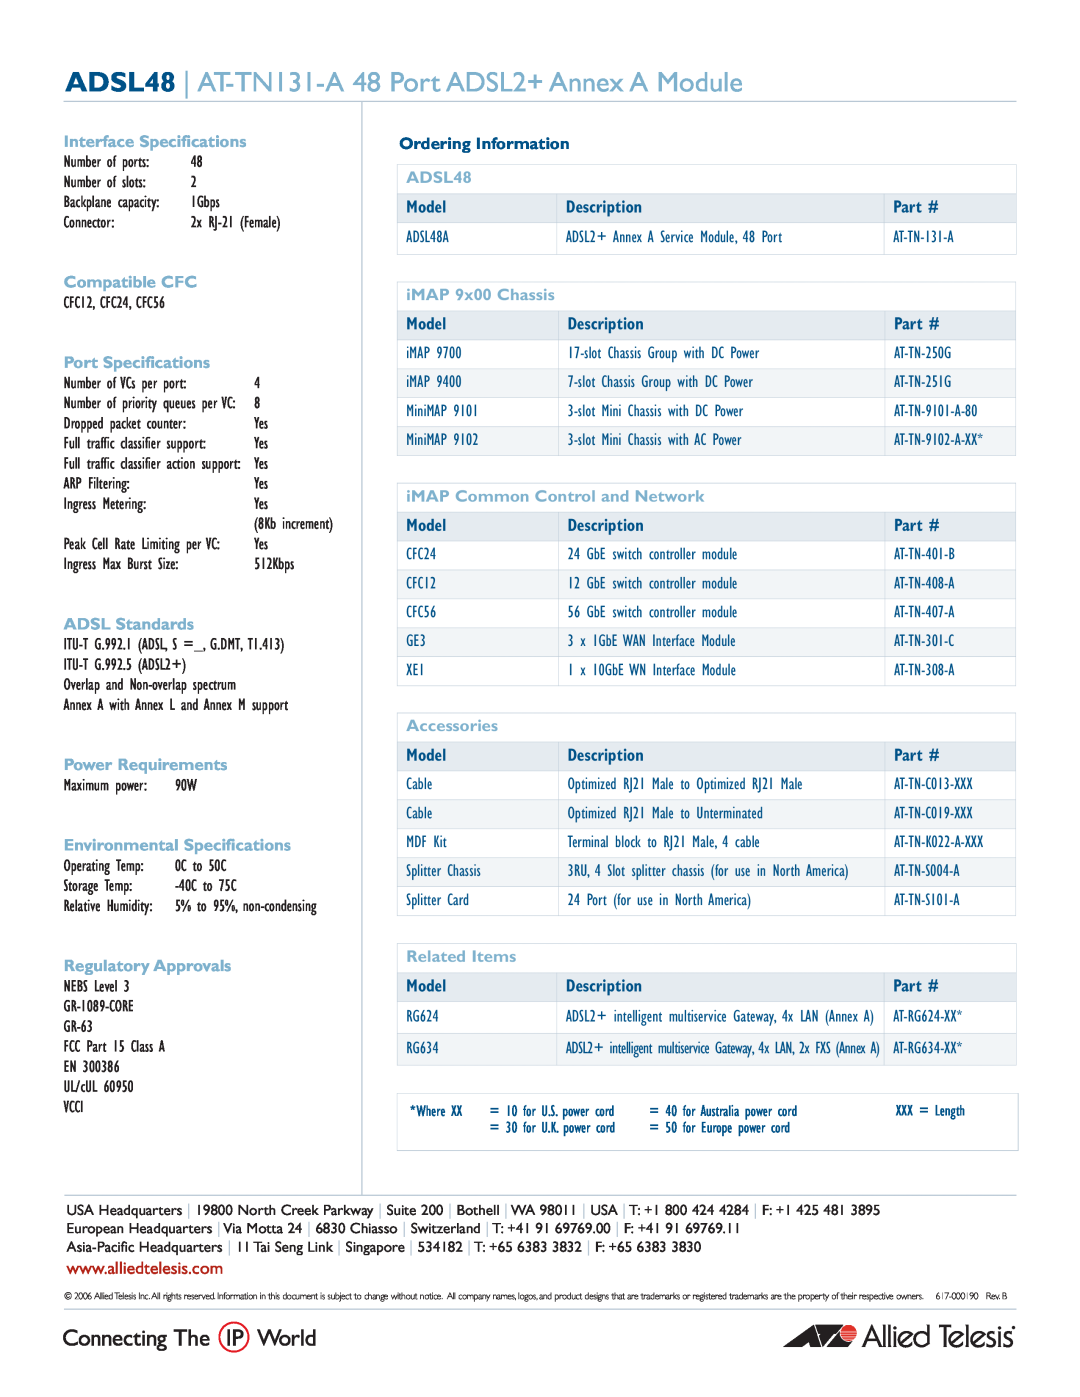 Allied Telesis manual ADSL48 AT-TN131-A 48 Port ADSL2+ Annex A Module, Ordering Information, Description 